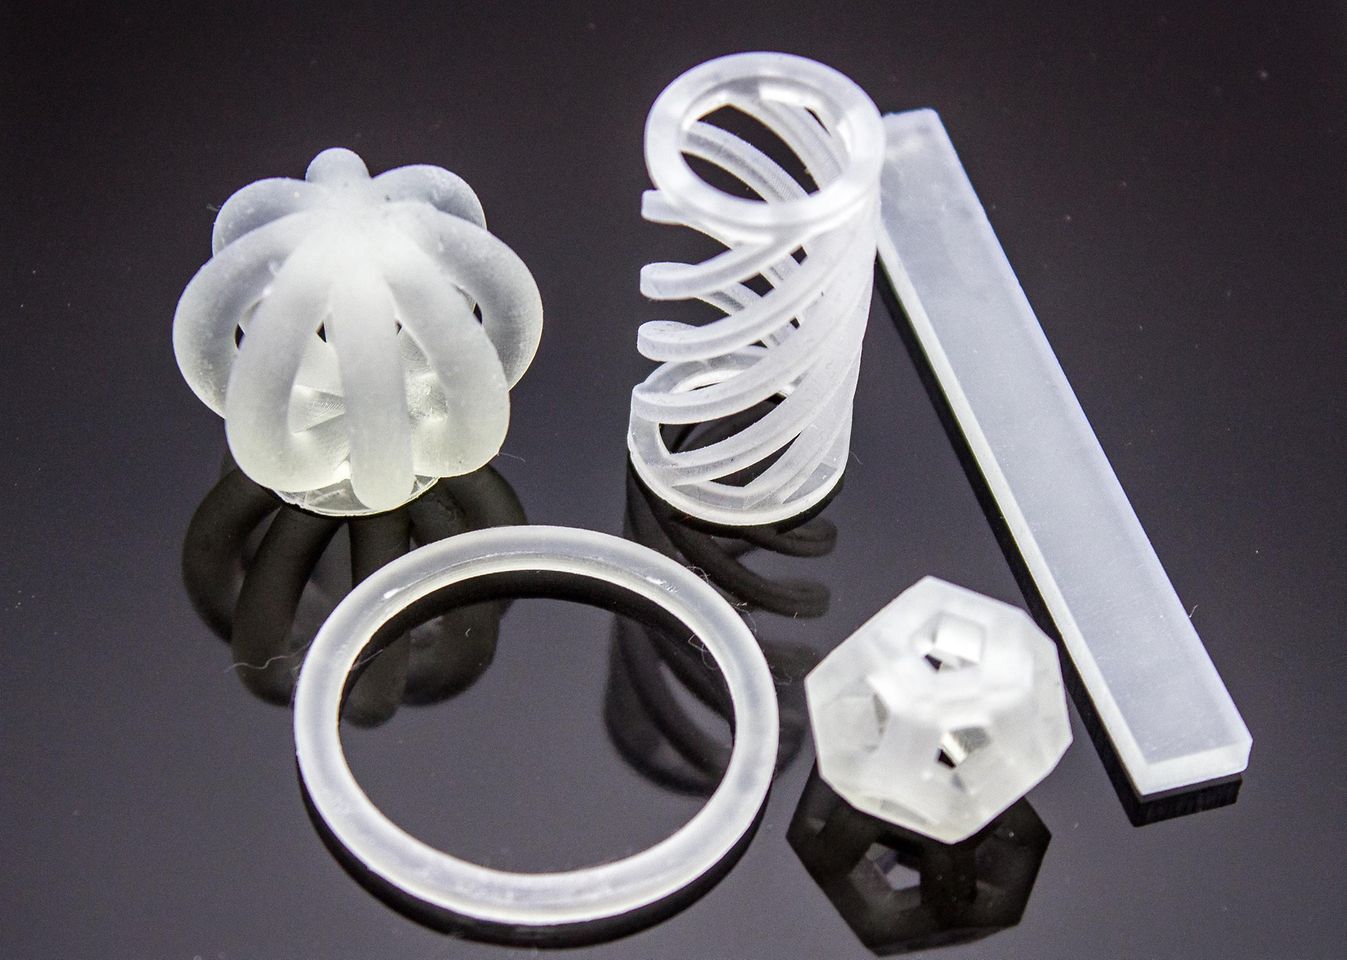 3D printing applications